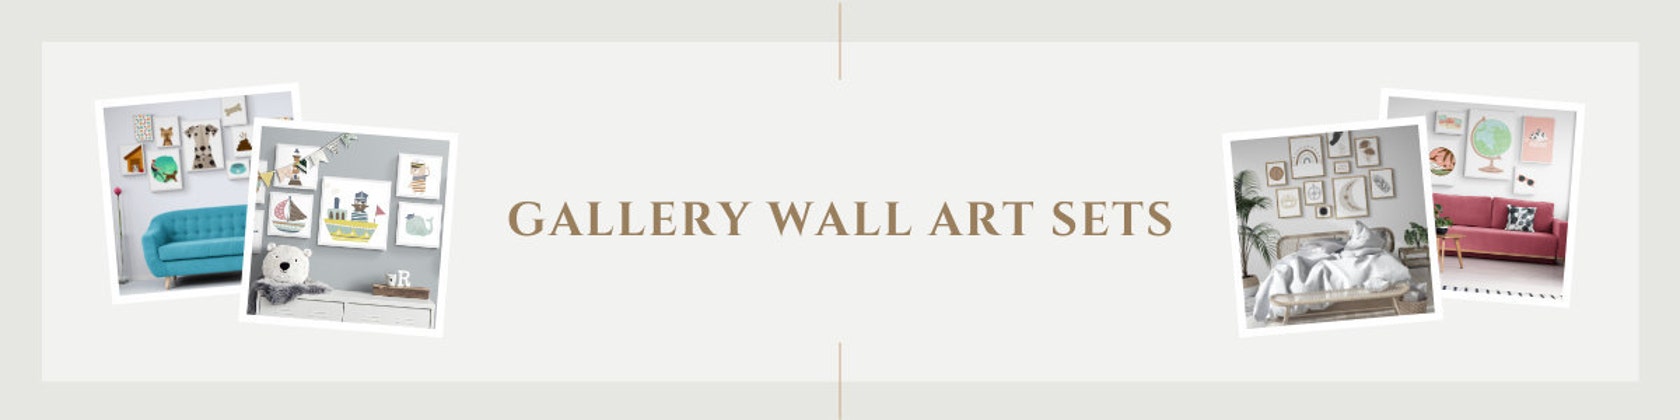 Dark Academia Decor, Moody Wall Art, Printable Gallery Wall Set